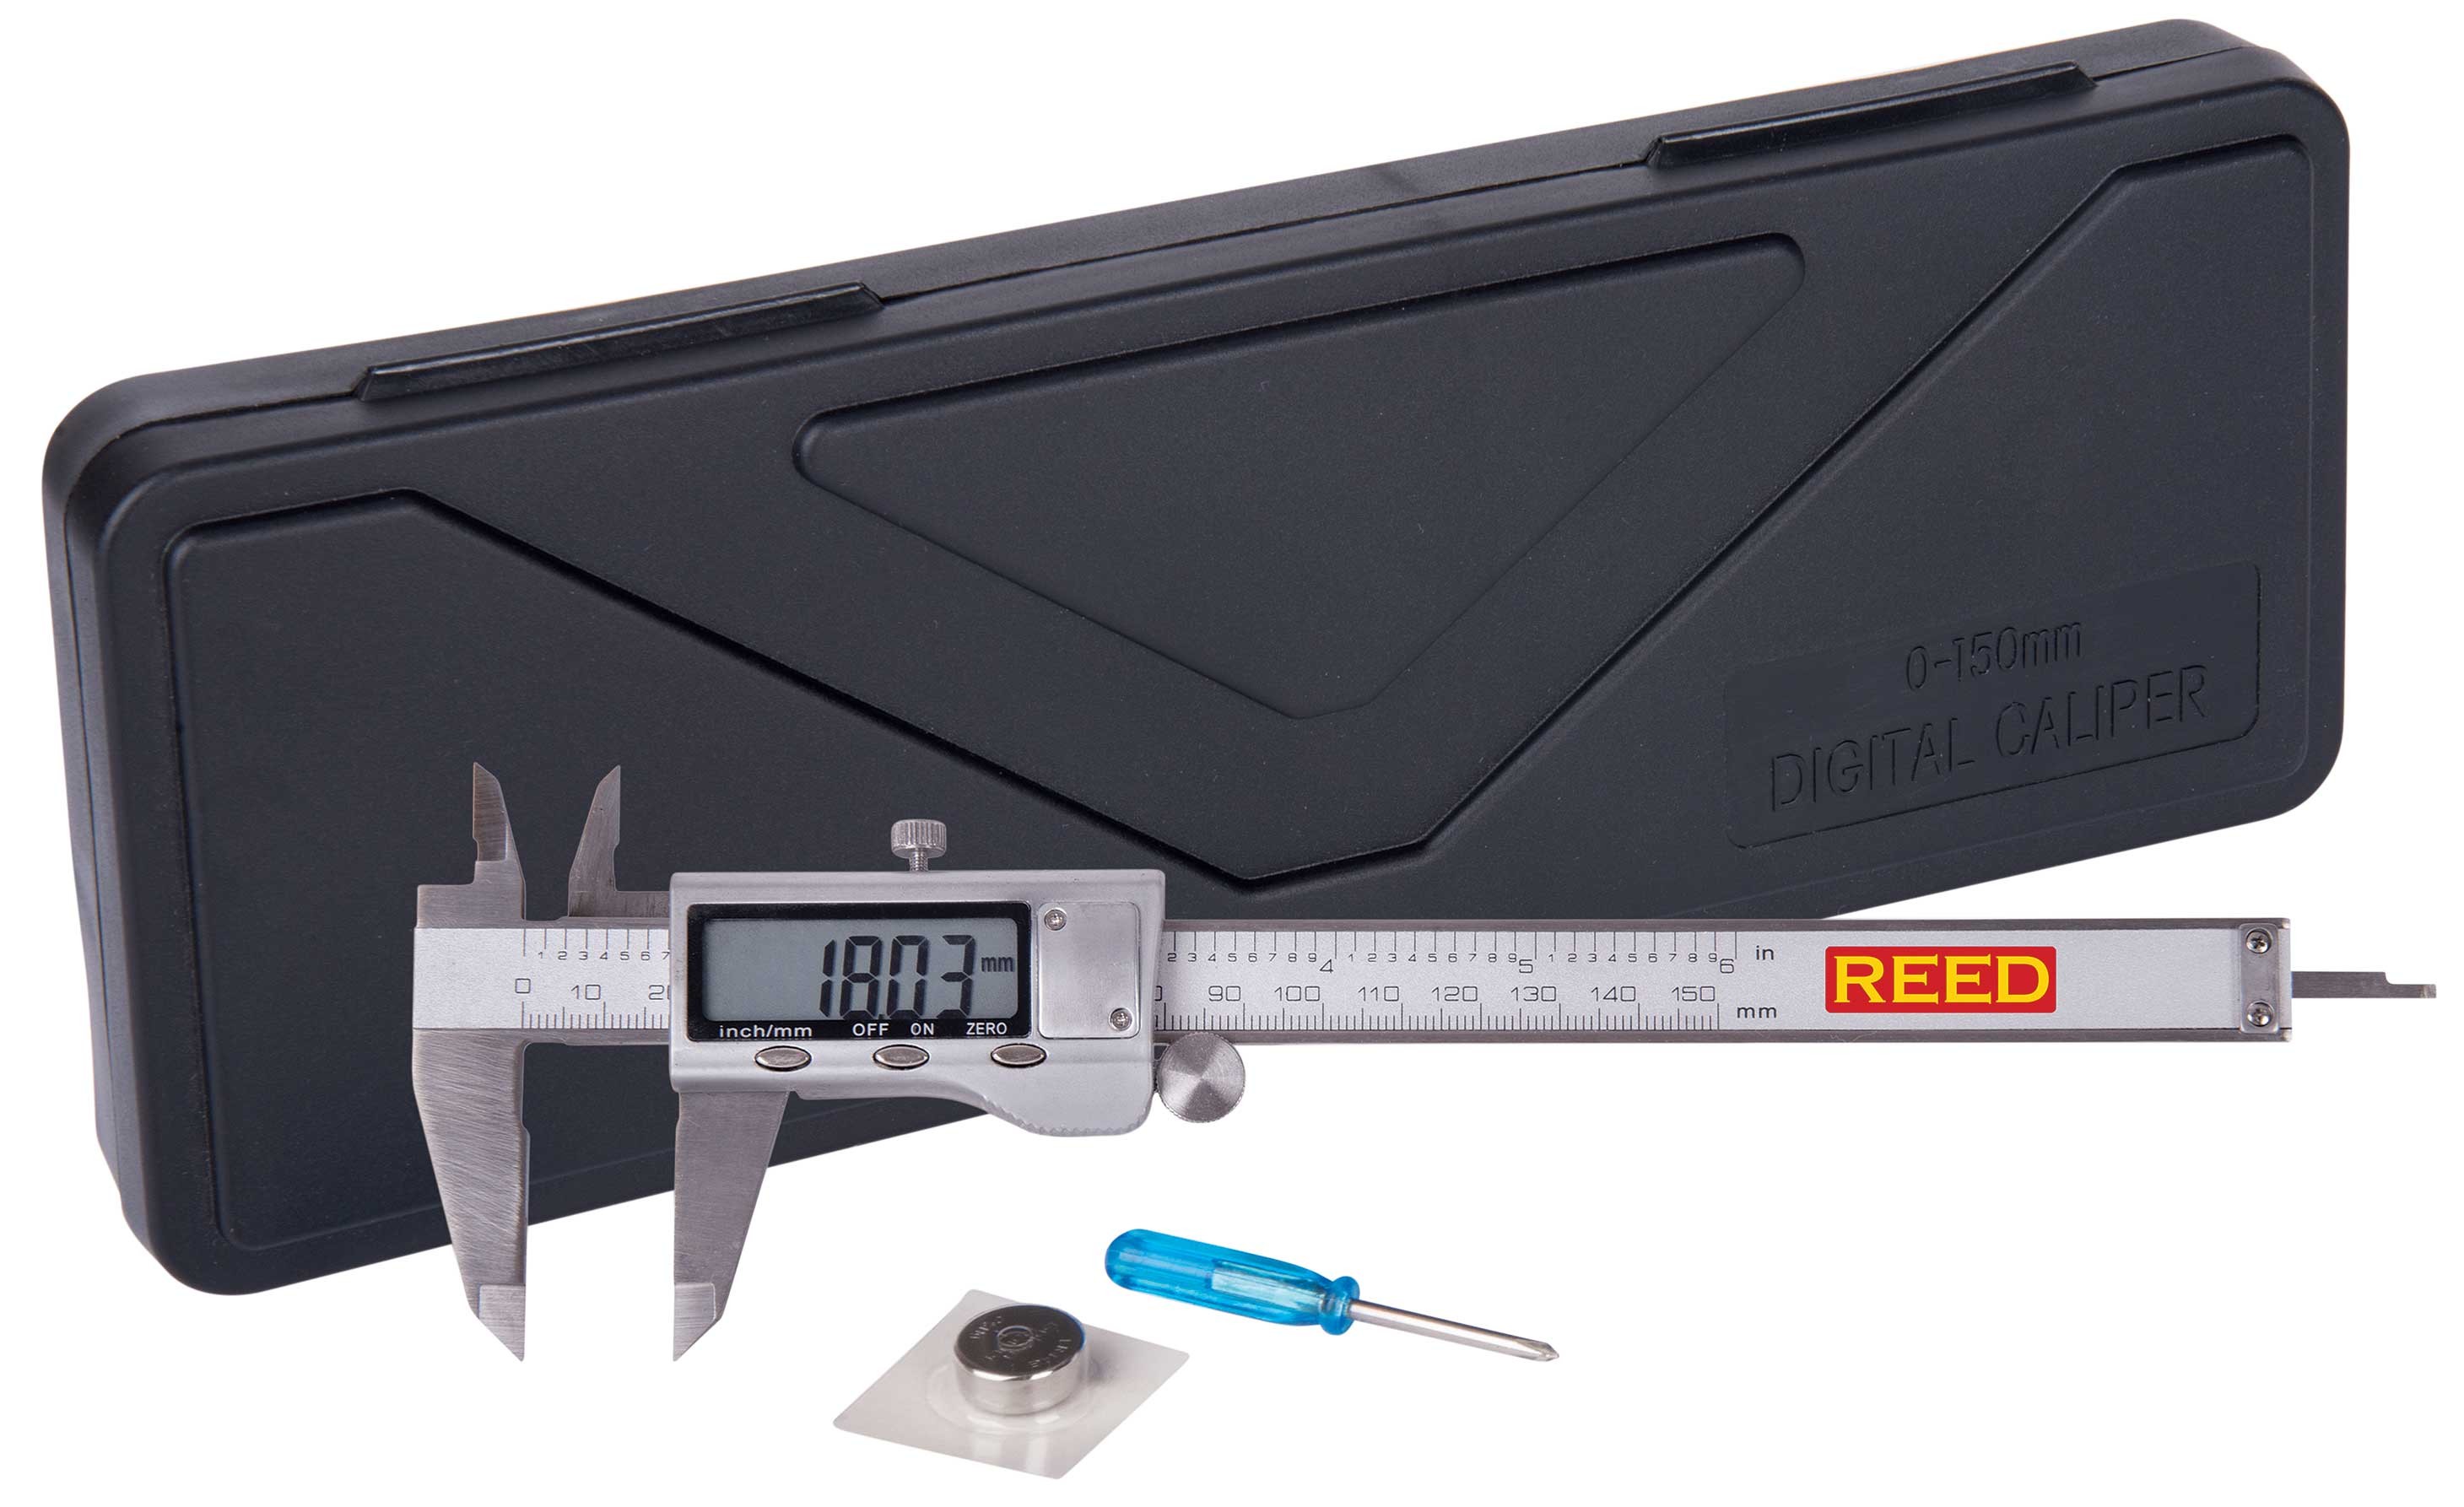 Reed R7400 Digital Caliper Included